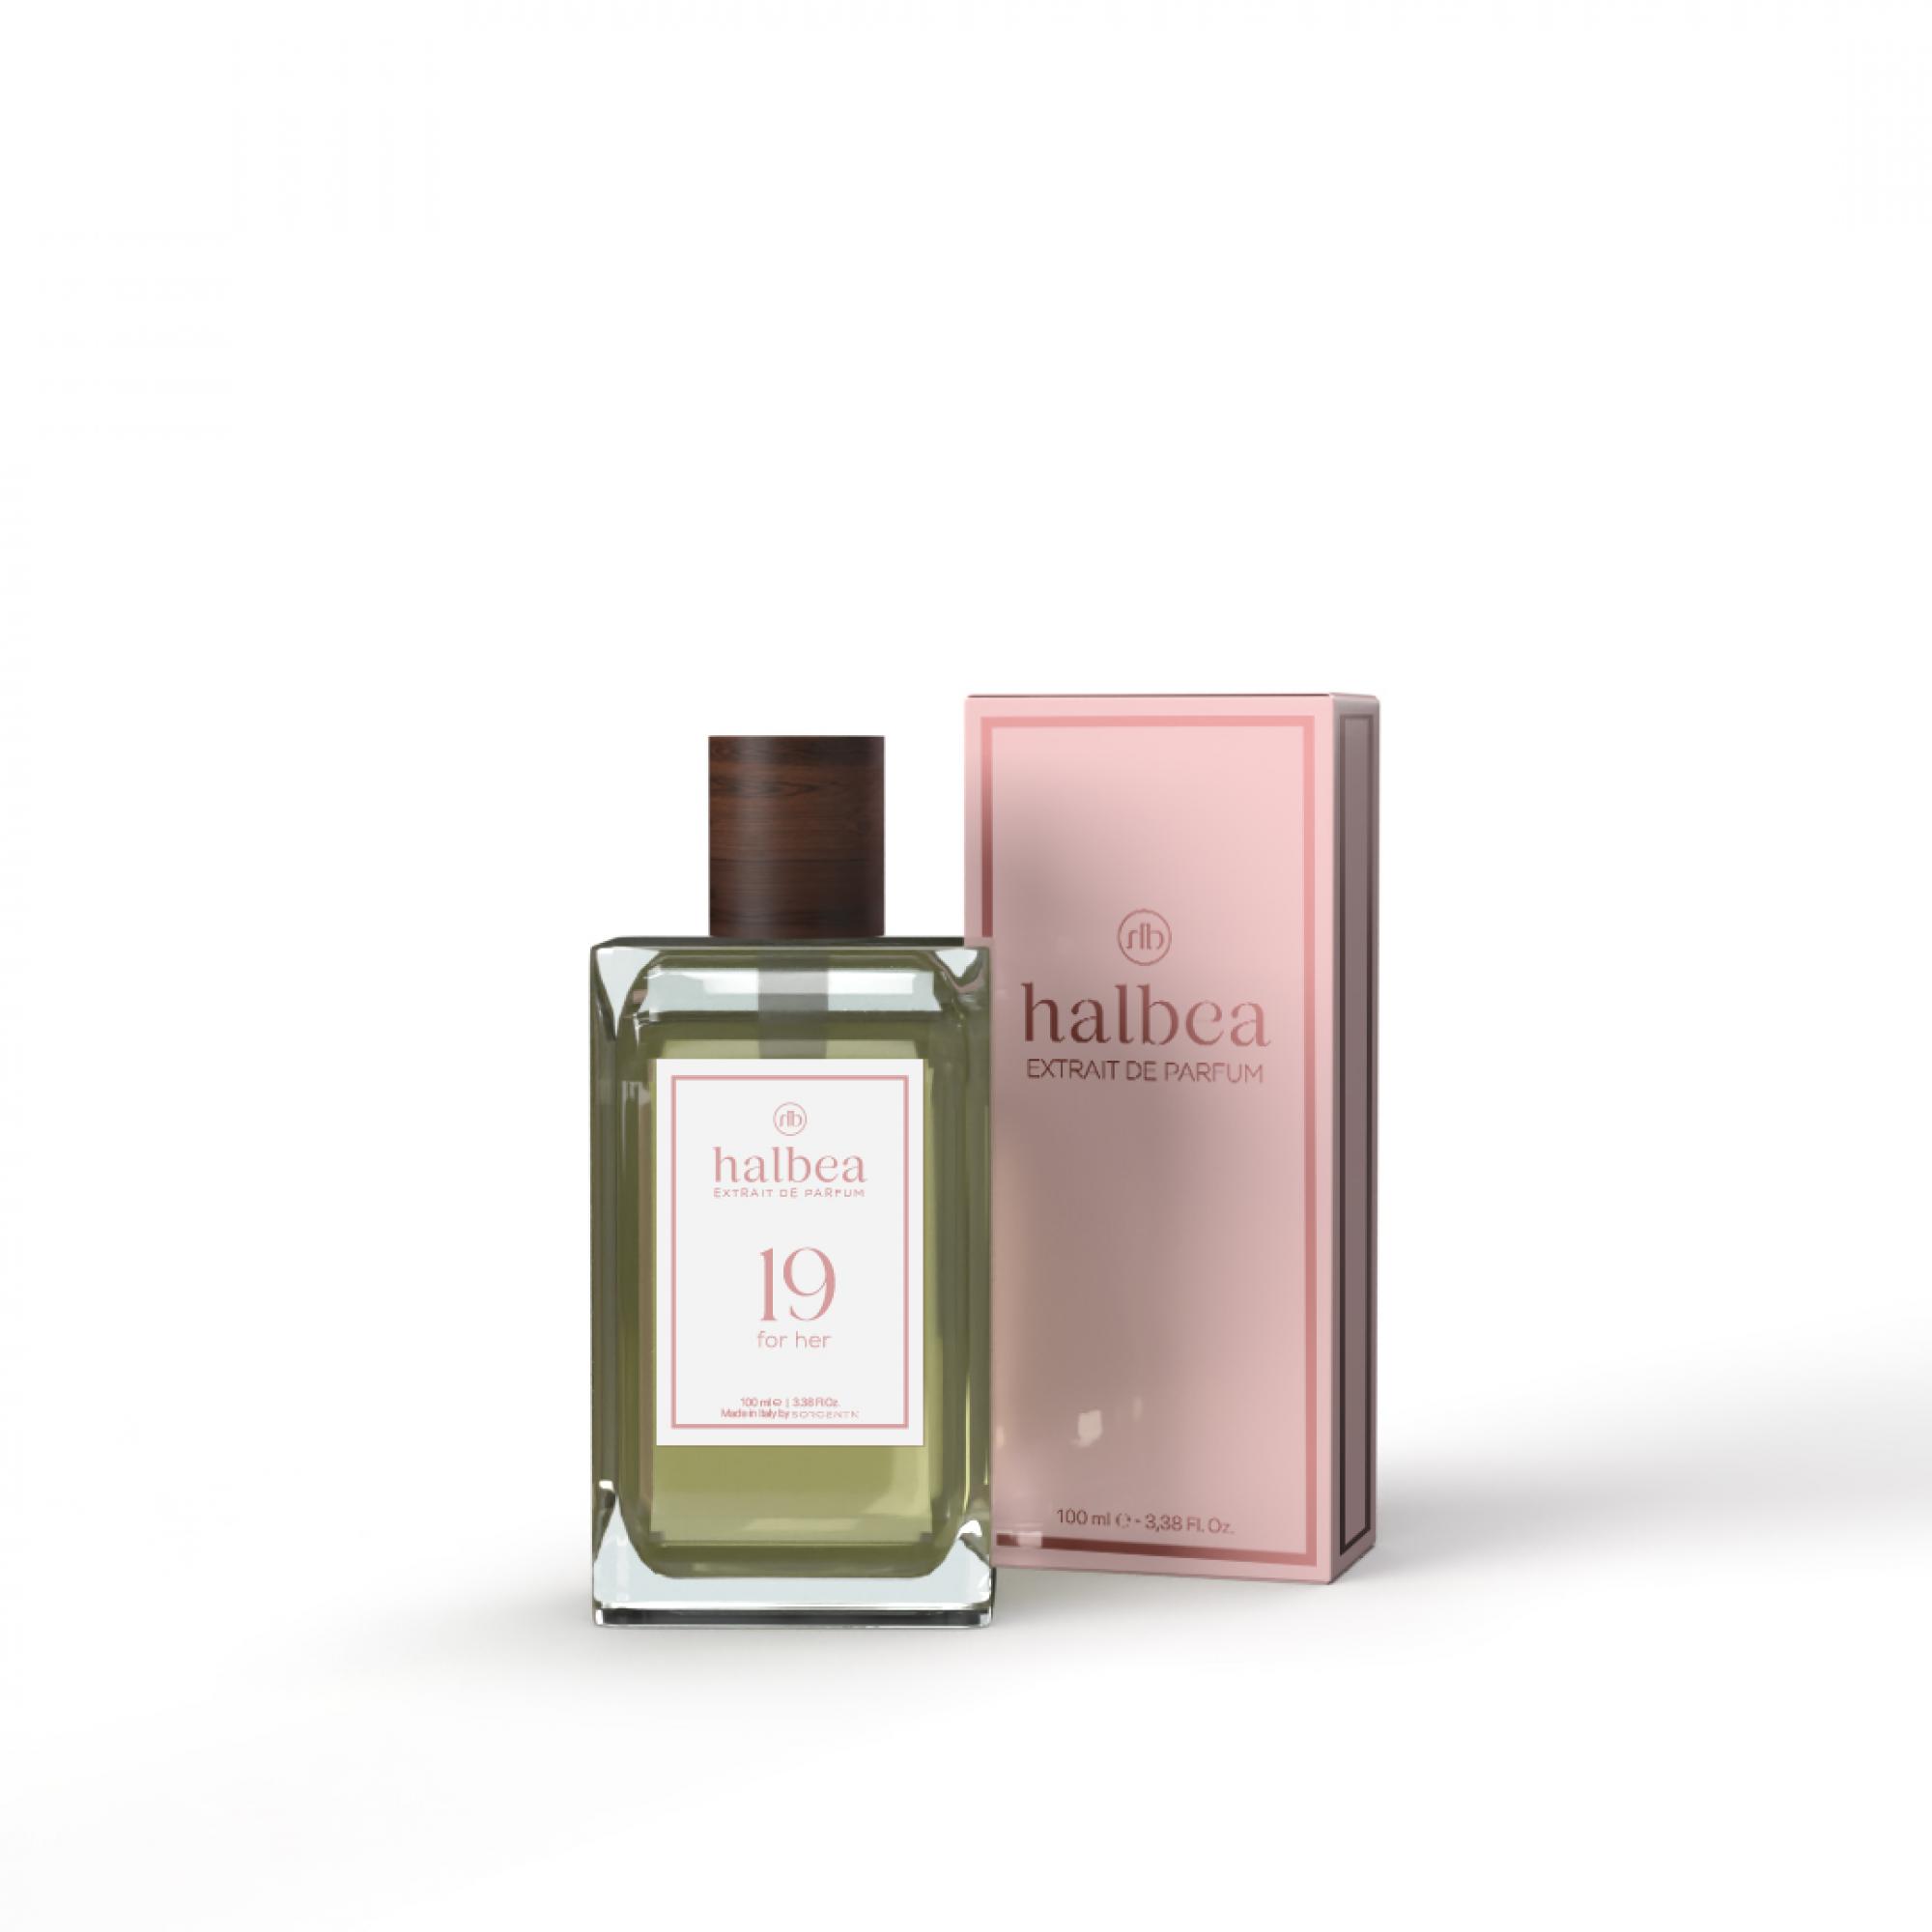 Halbea Parfum Nr. 19 insp. by Chanel Coco Mademoiselle 100ml